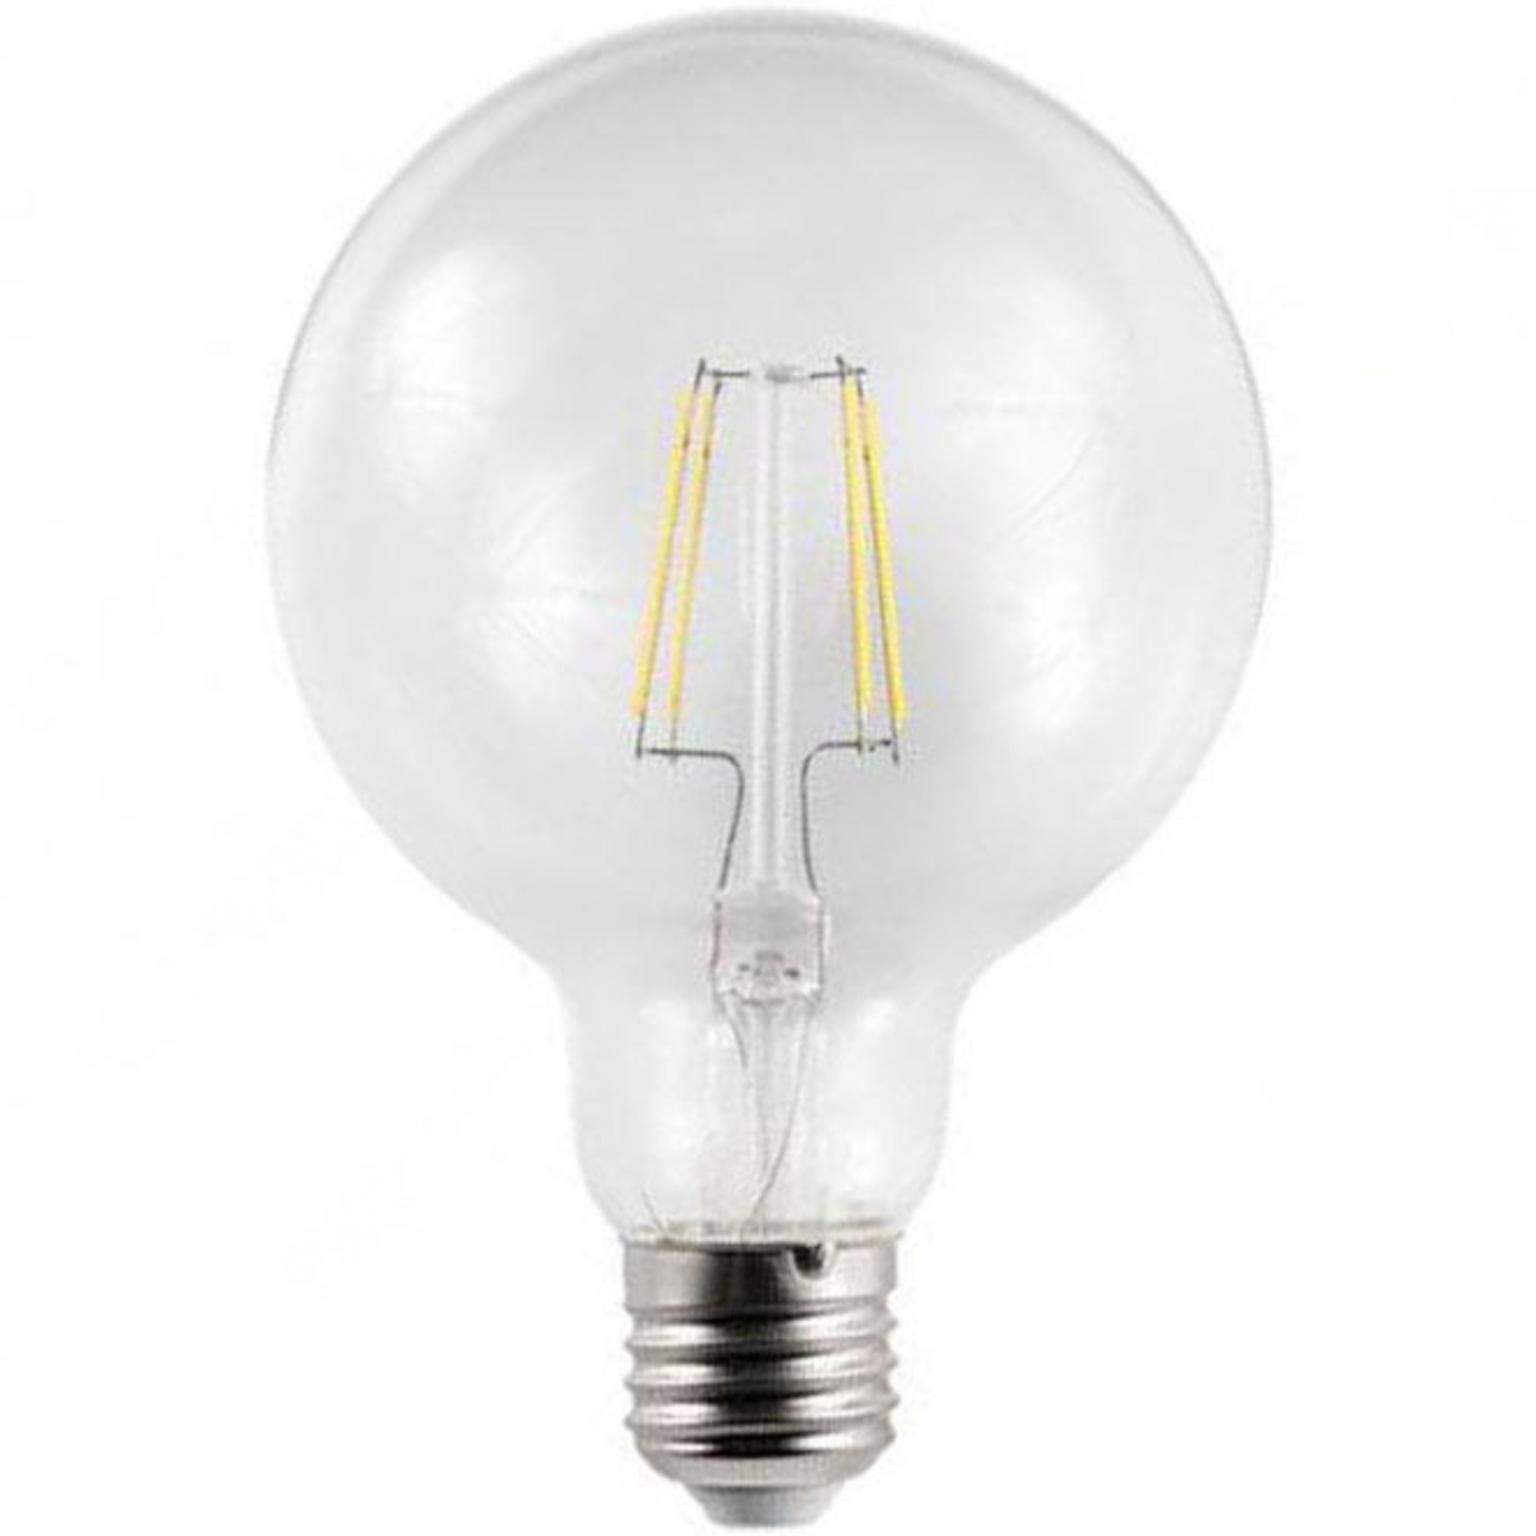 Filament LED Lamp - E27 - 4.5 Watt Lamptype: E27 4.5 Watt - 230 Volt, Lichtsterkte: 450 lumen, Afmetingen: Ø95mm/H135mm, Lichtkleur: Extra warm wit - 2700 K.